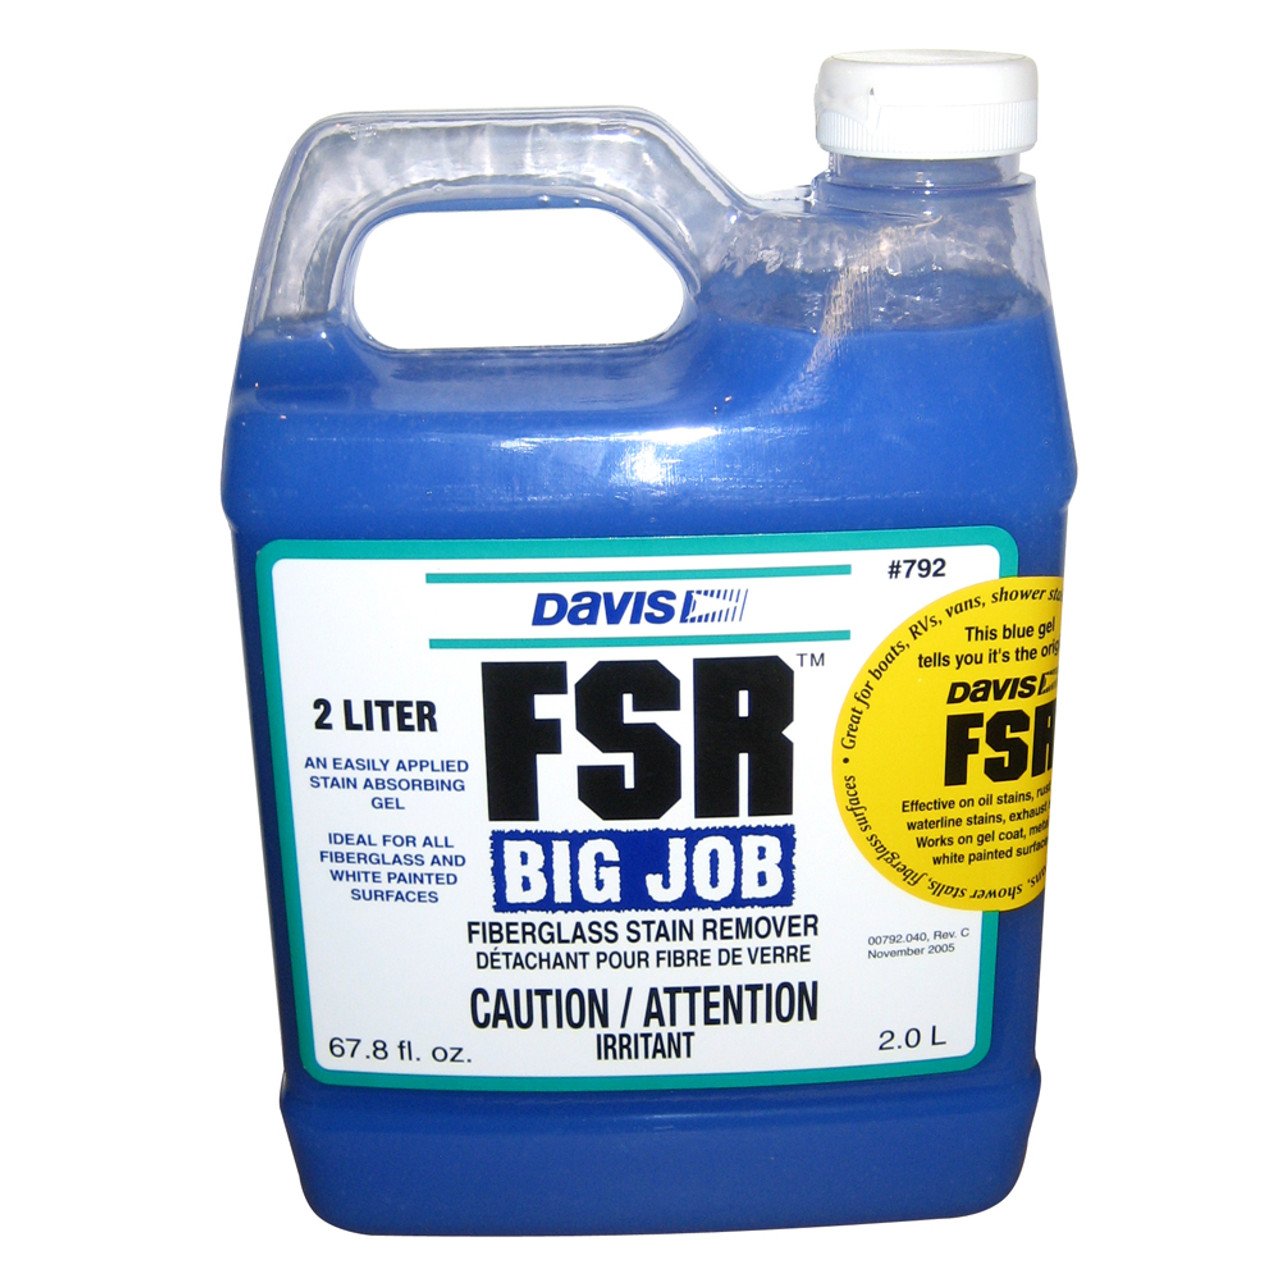 Davis FSR Big Job Fiberglass Stain Remover - 2-Liter [792]